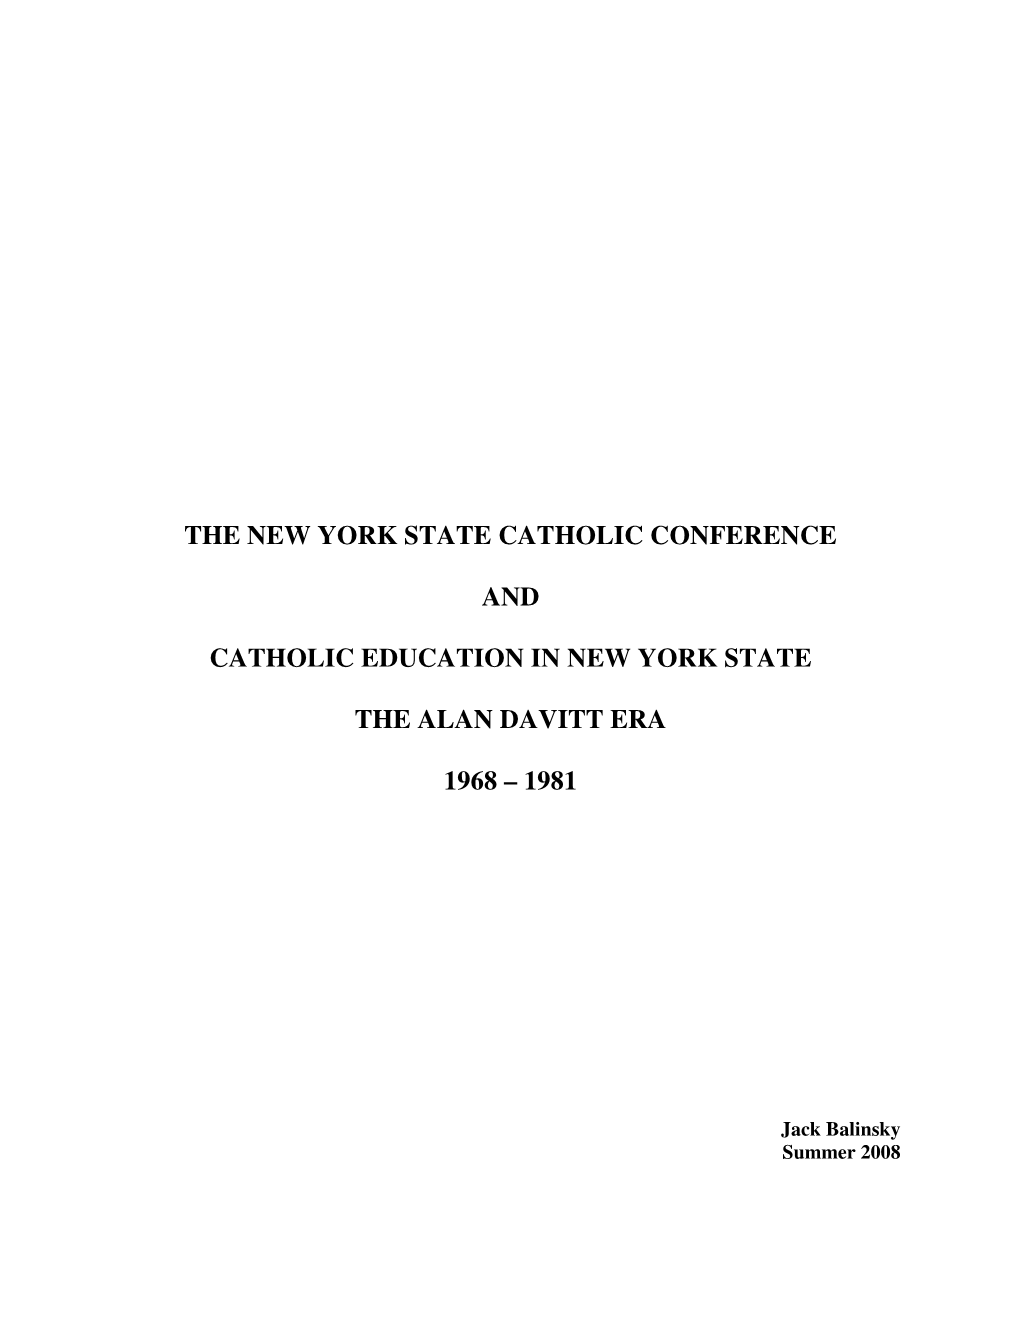 Catholic Education in New York State